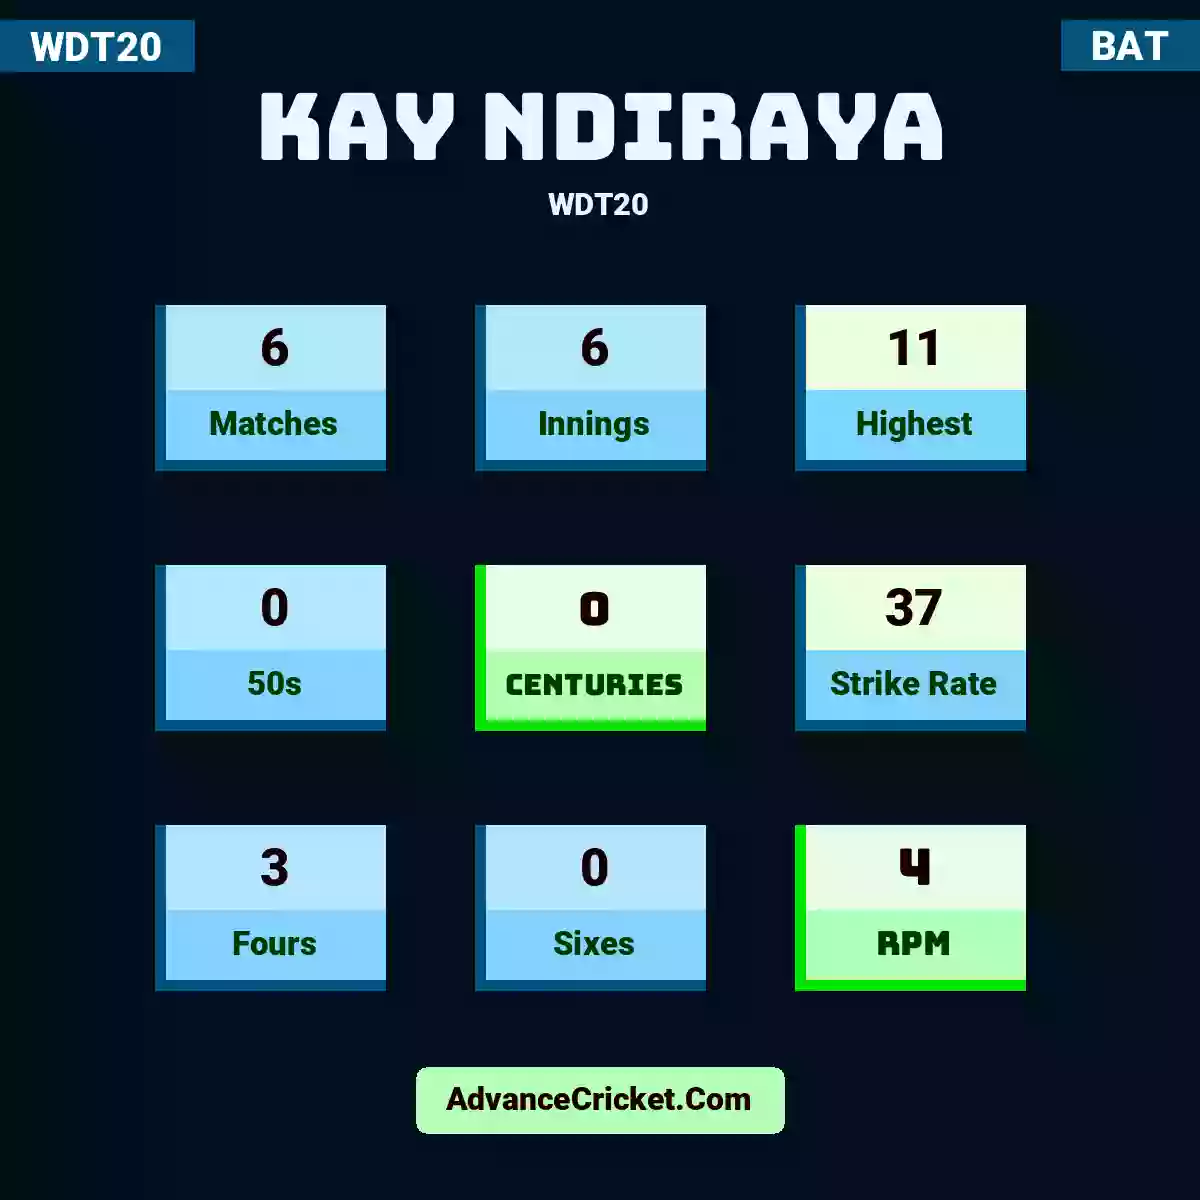 Kay Ndiraya WDT20 , Kay Ndiraya played 6 matches, scored 11 runs as highest, 0 half-centuries, and 0 centuries, with a strike rate of 37. K.Ndiraya hit 3 fours and 0 sixes, with an RPM of 4.